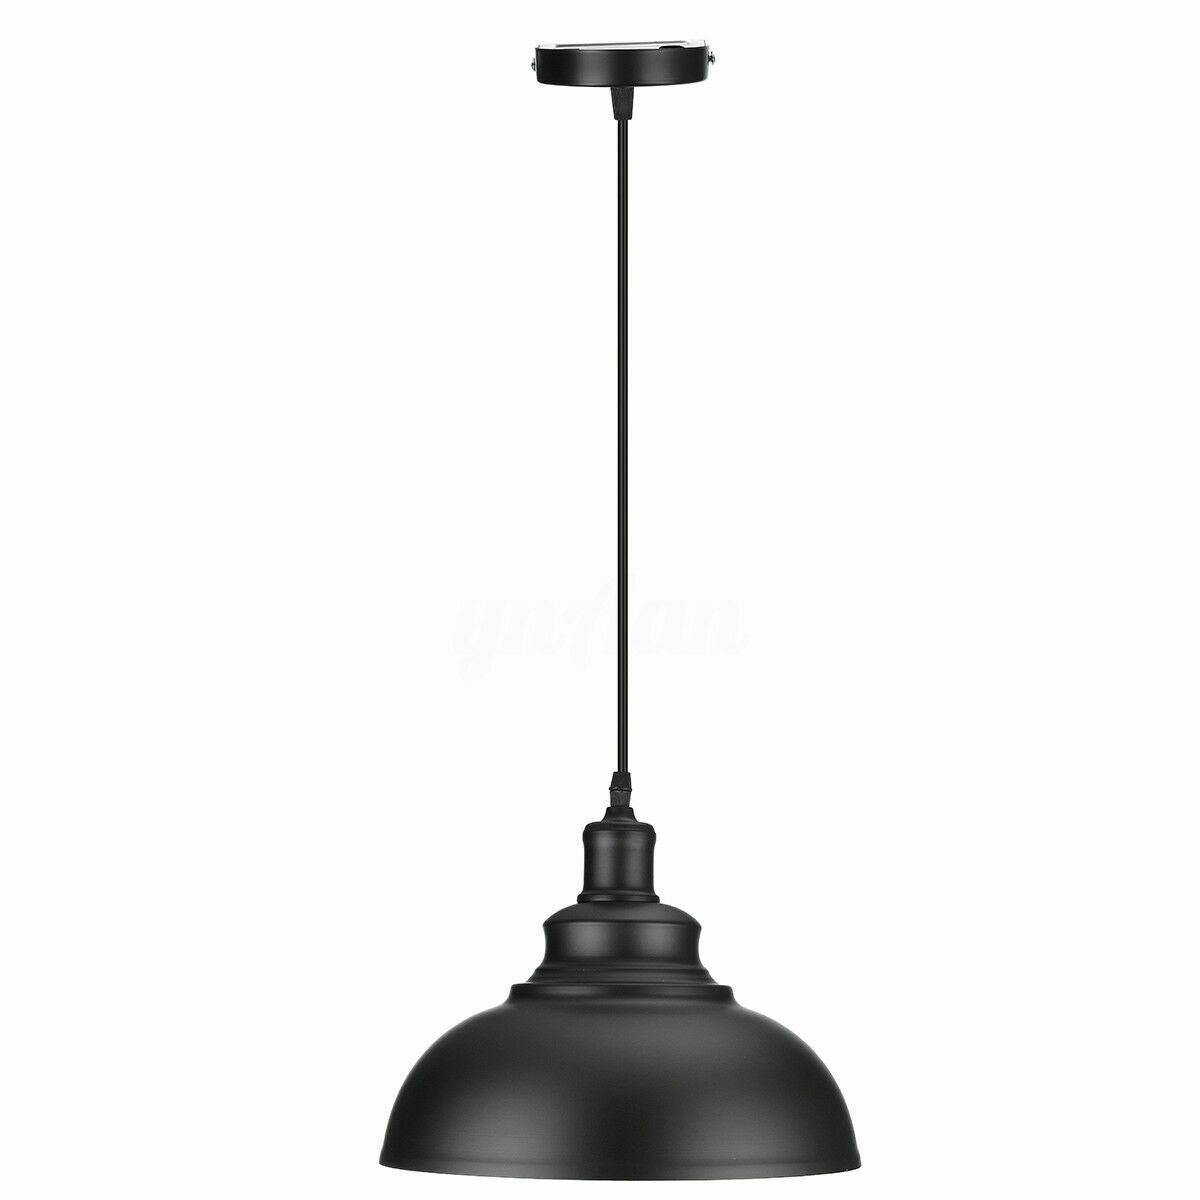 3 Pack Vintage Industrial Retro Ceiling Pendant Light Lampshade Black Metal Light Shade - Shop for LED lights - Transformers - Lampshades - Holders | LEDSone UK